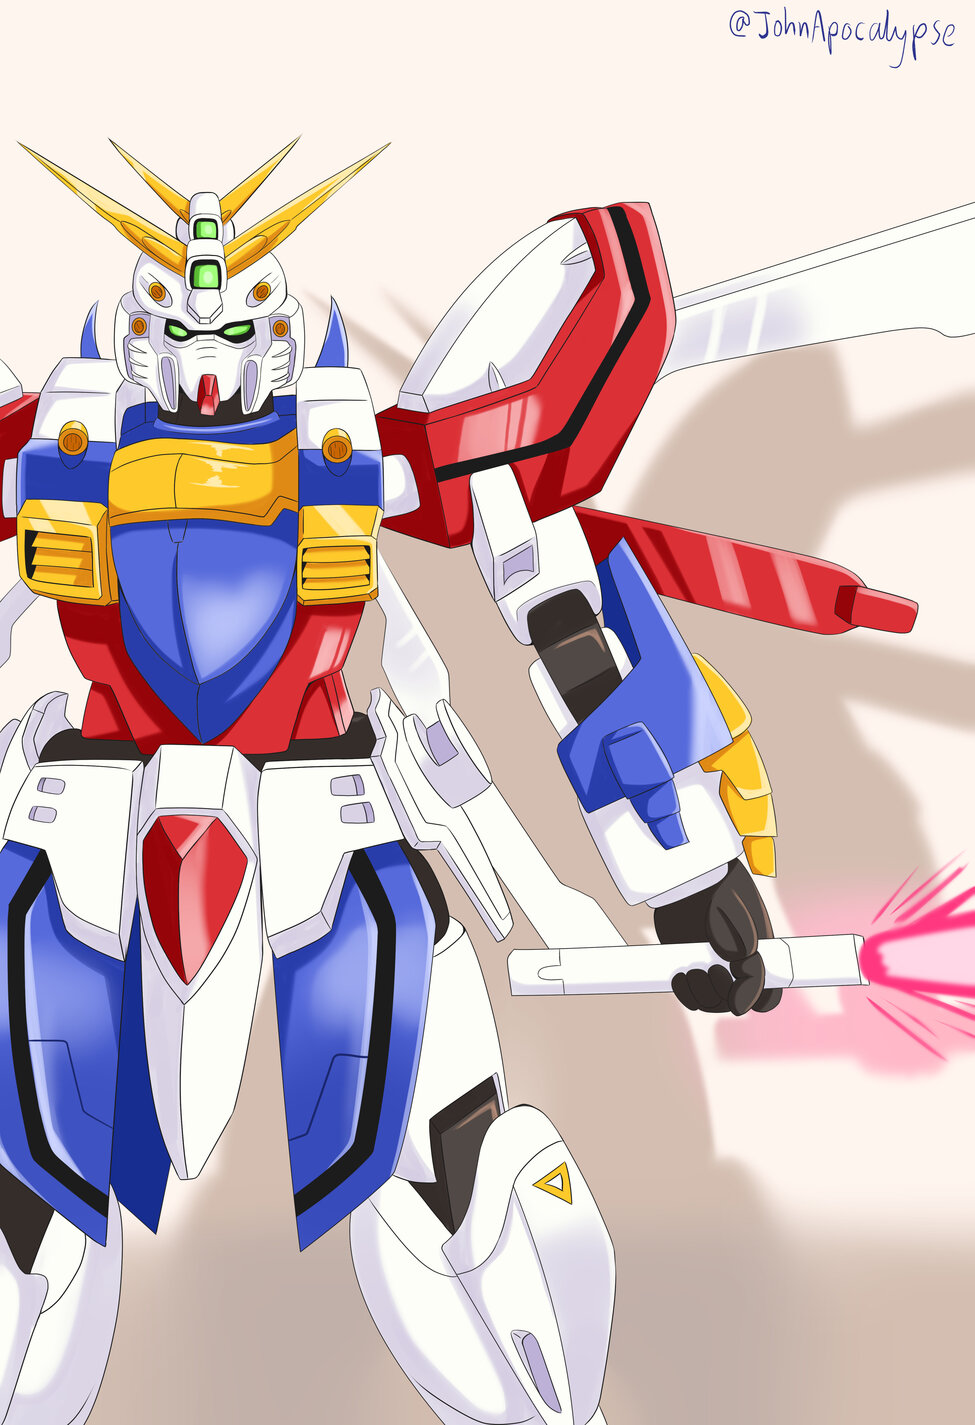 Anime 975x1425 anime mechs Super Robot Taisen Gundam Mobile Fighter G Gundam artwork digital art fan art God Gundam